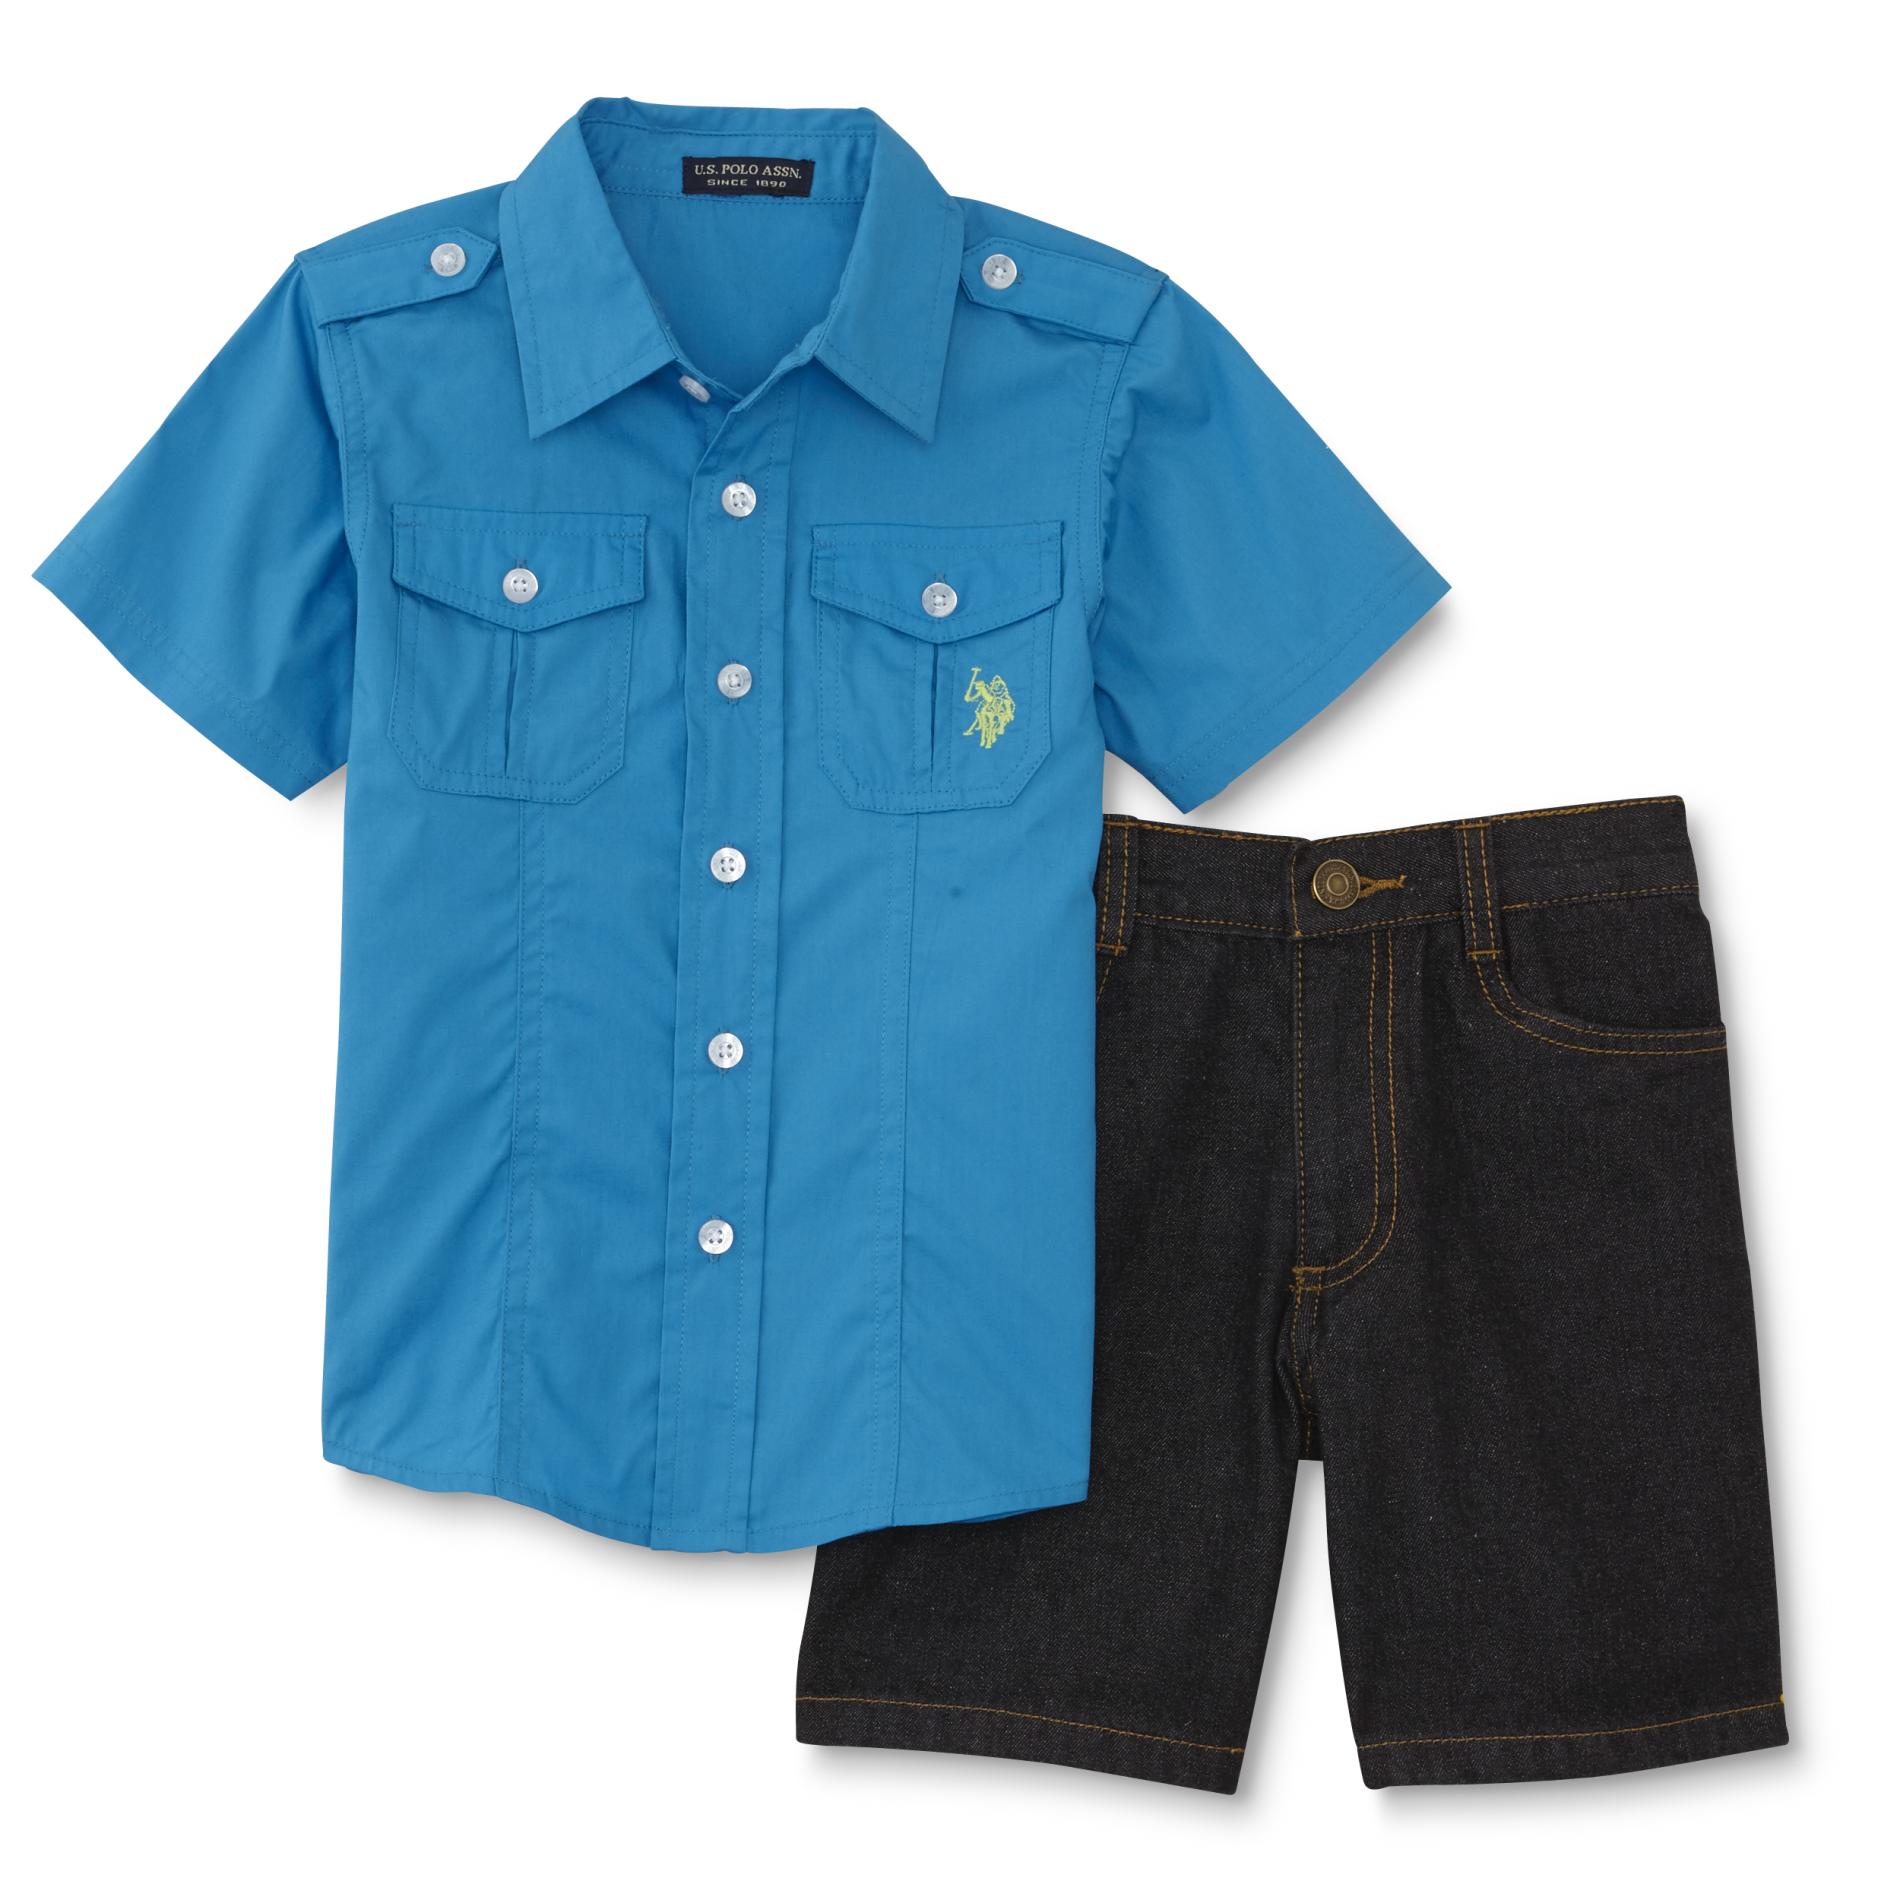 U.S. Polo Assn. Infant & Toddler Boy's Shirt & Shorts